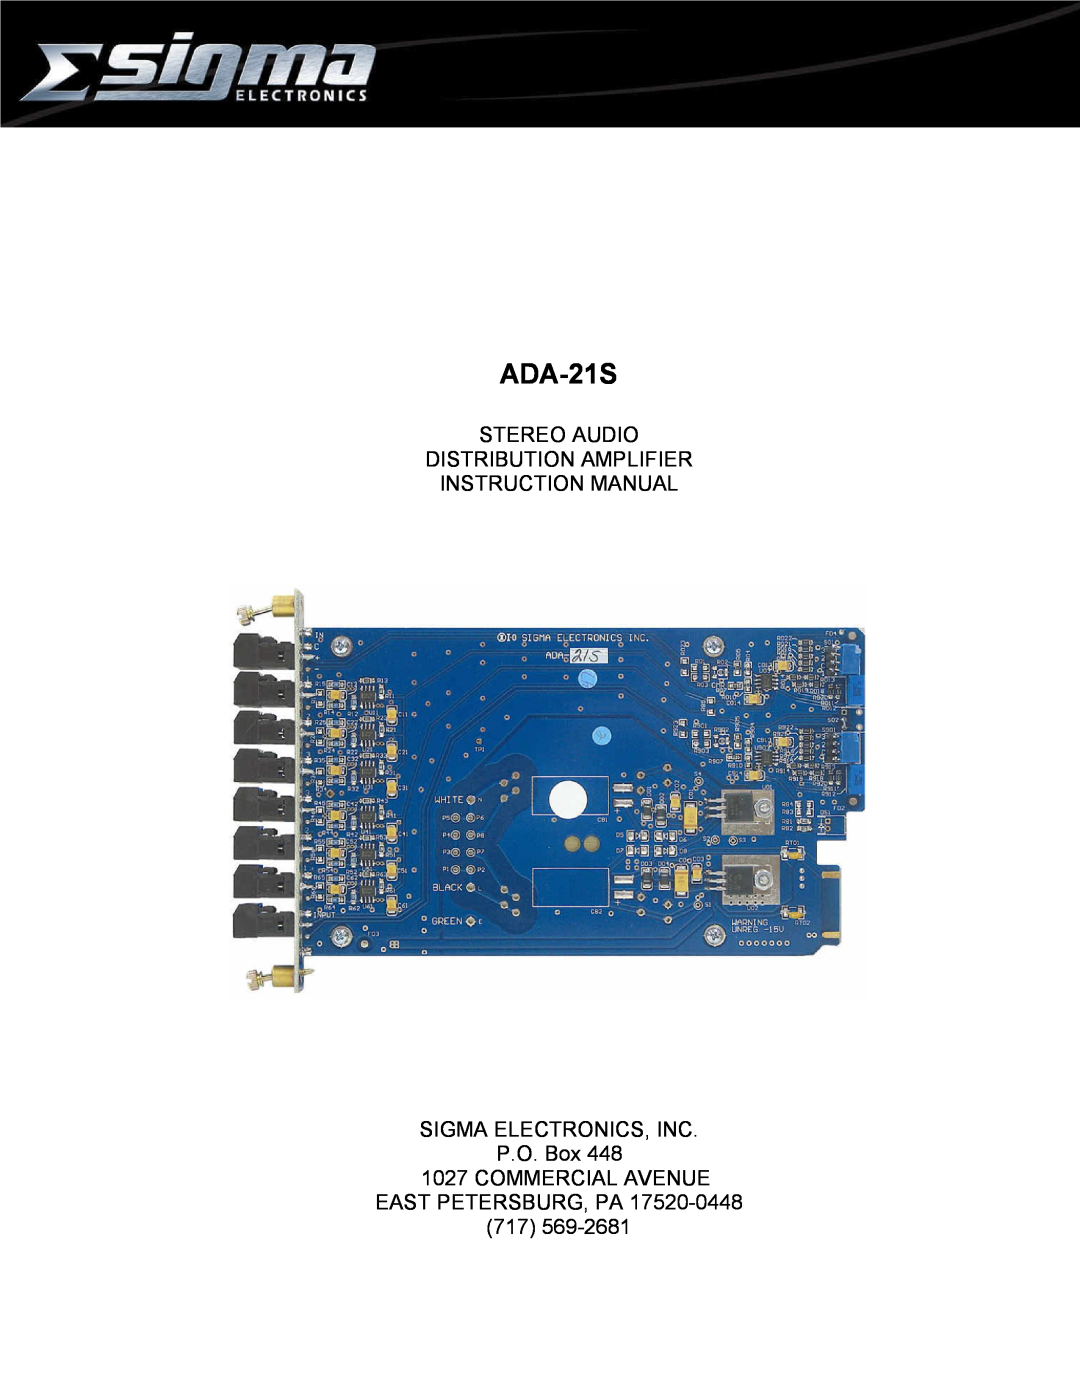 Sigma ADA-21S instruction manual SIGMA ELECTRONICS, INC P.O. Box, COMMERCIAL AVENUE EAST PETERSBURG, PA 17520-0448 717 